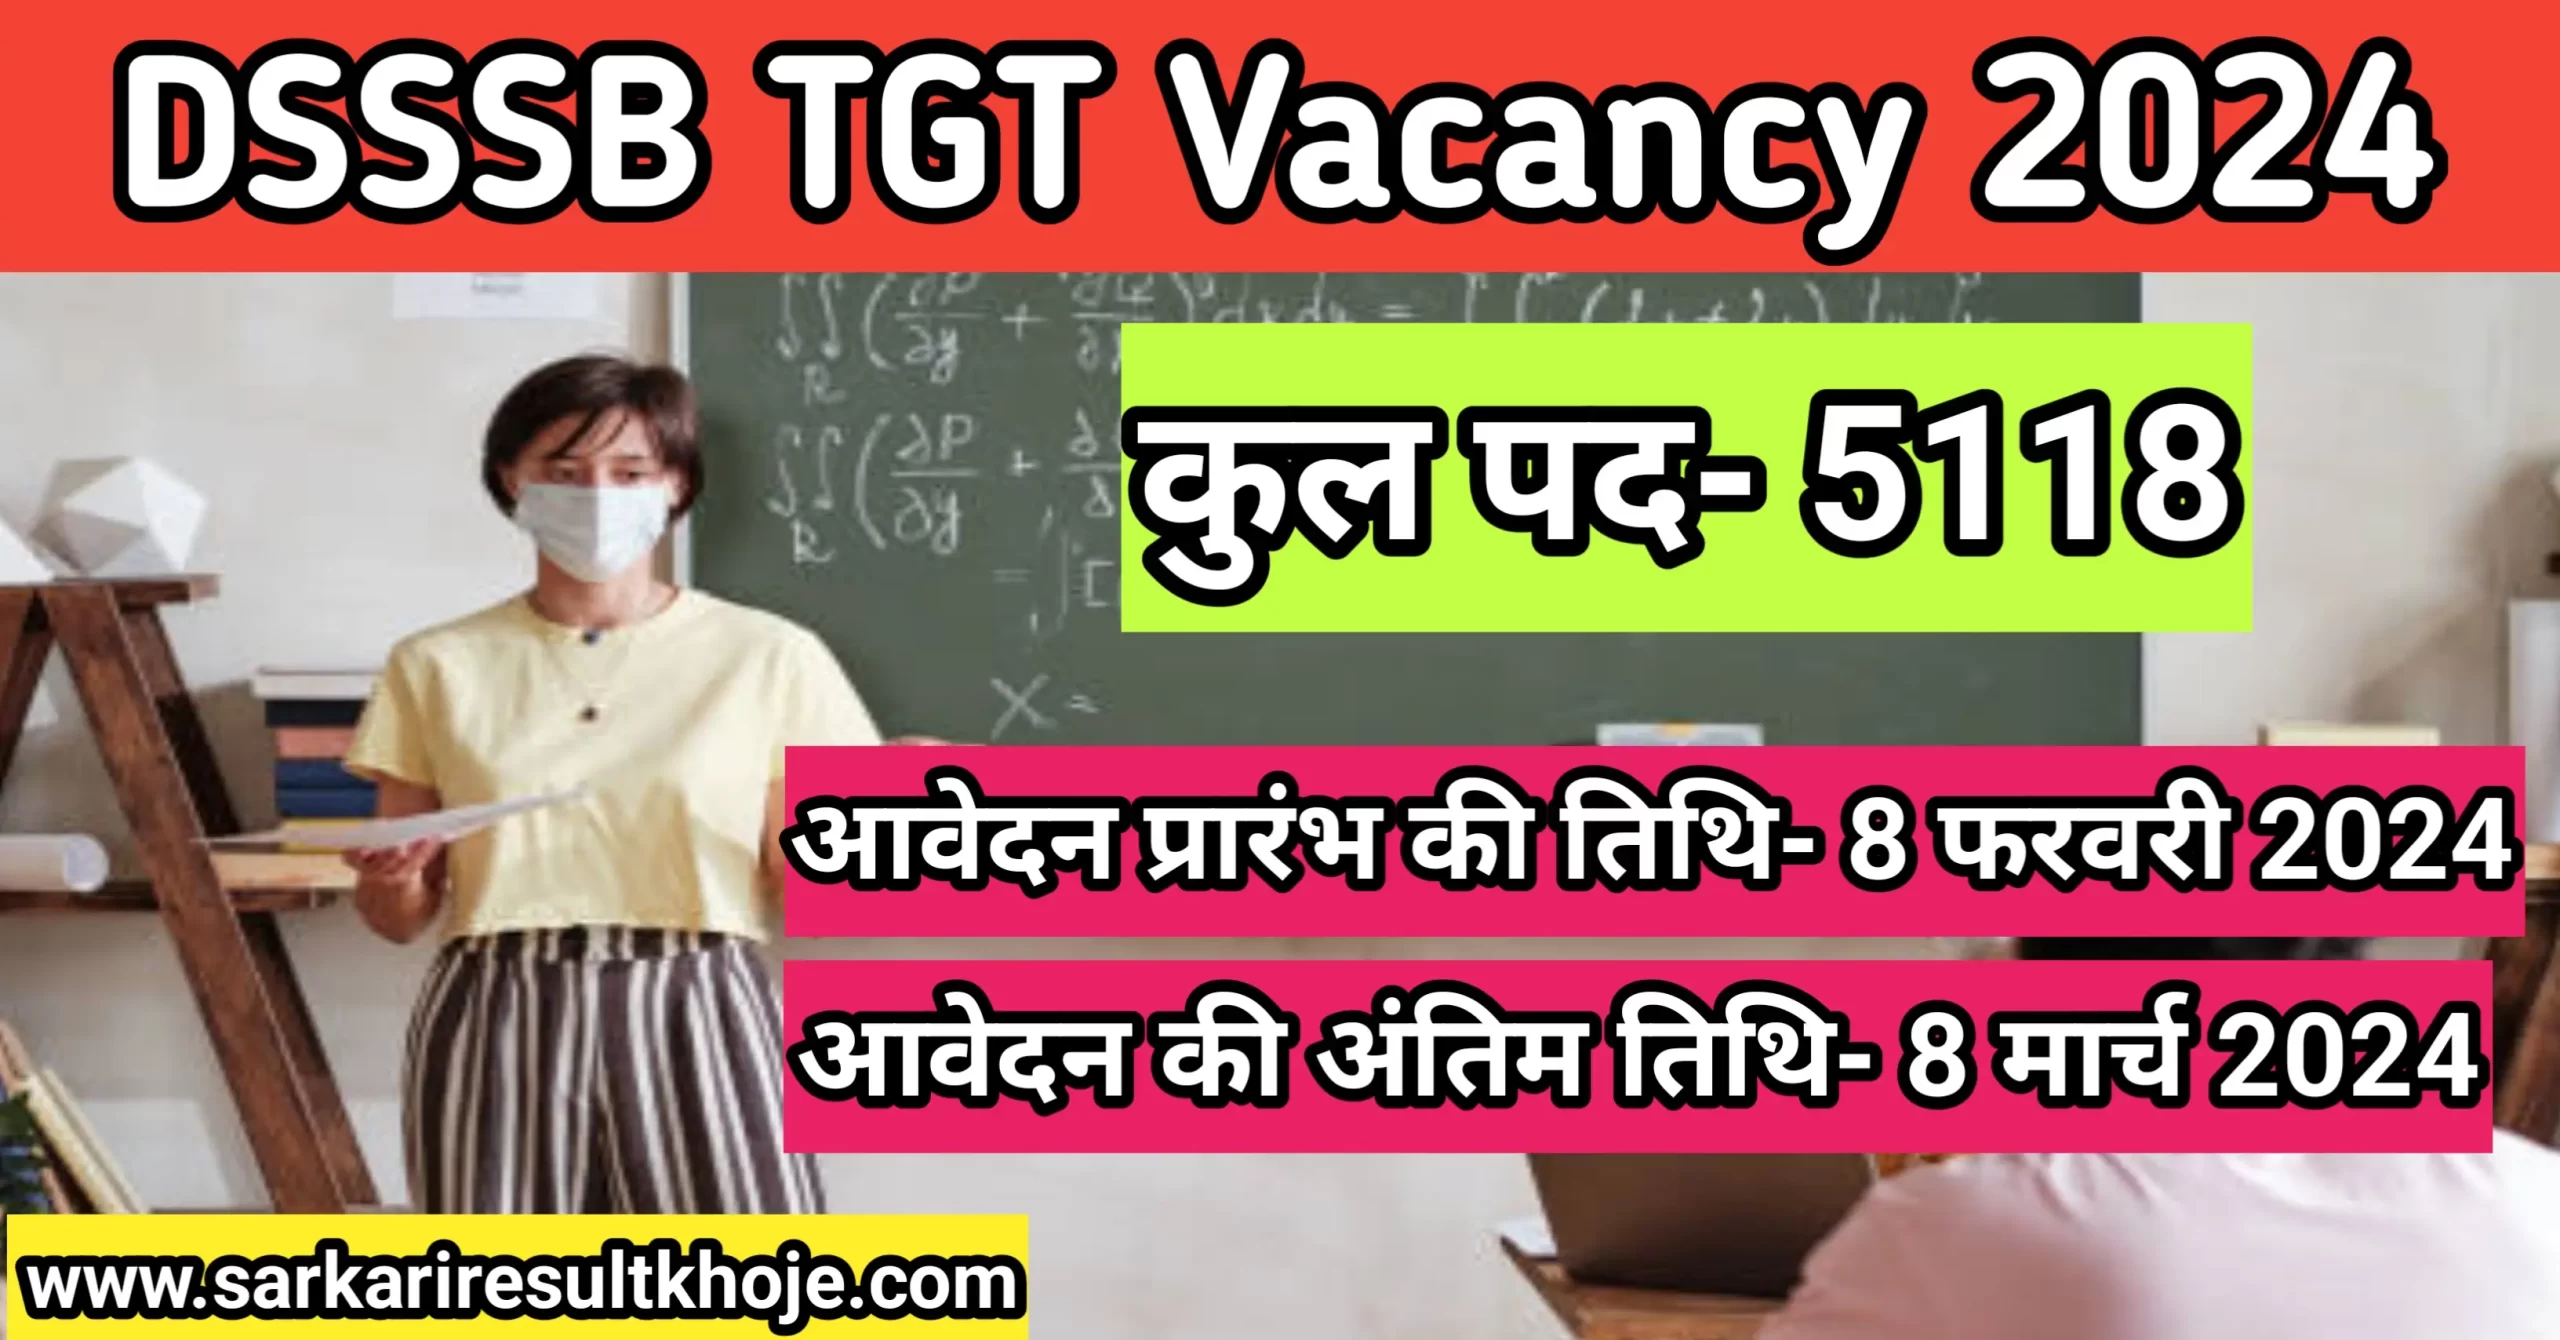 Dsssb tgt vacancy 2023 notification in hindi